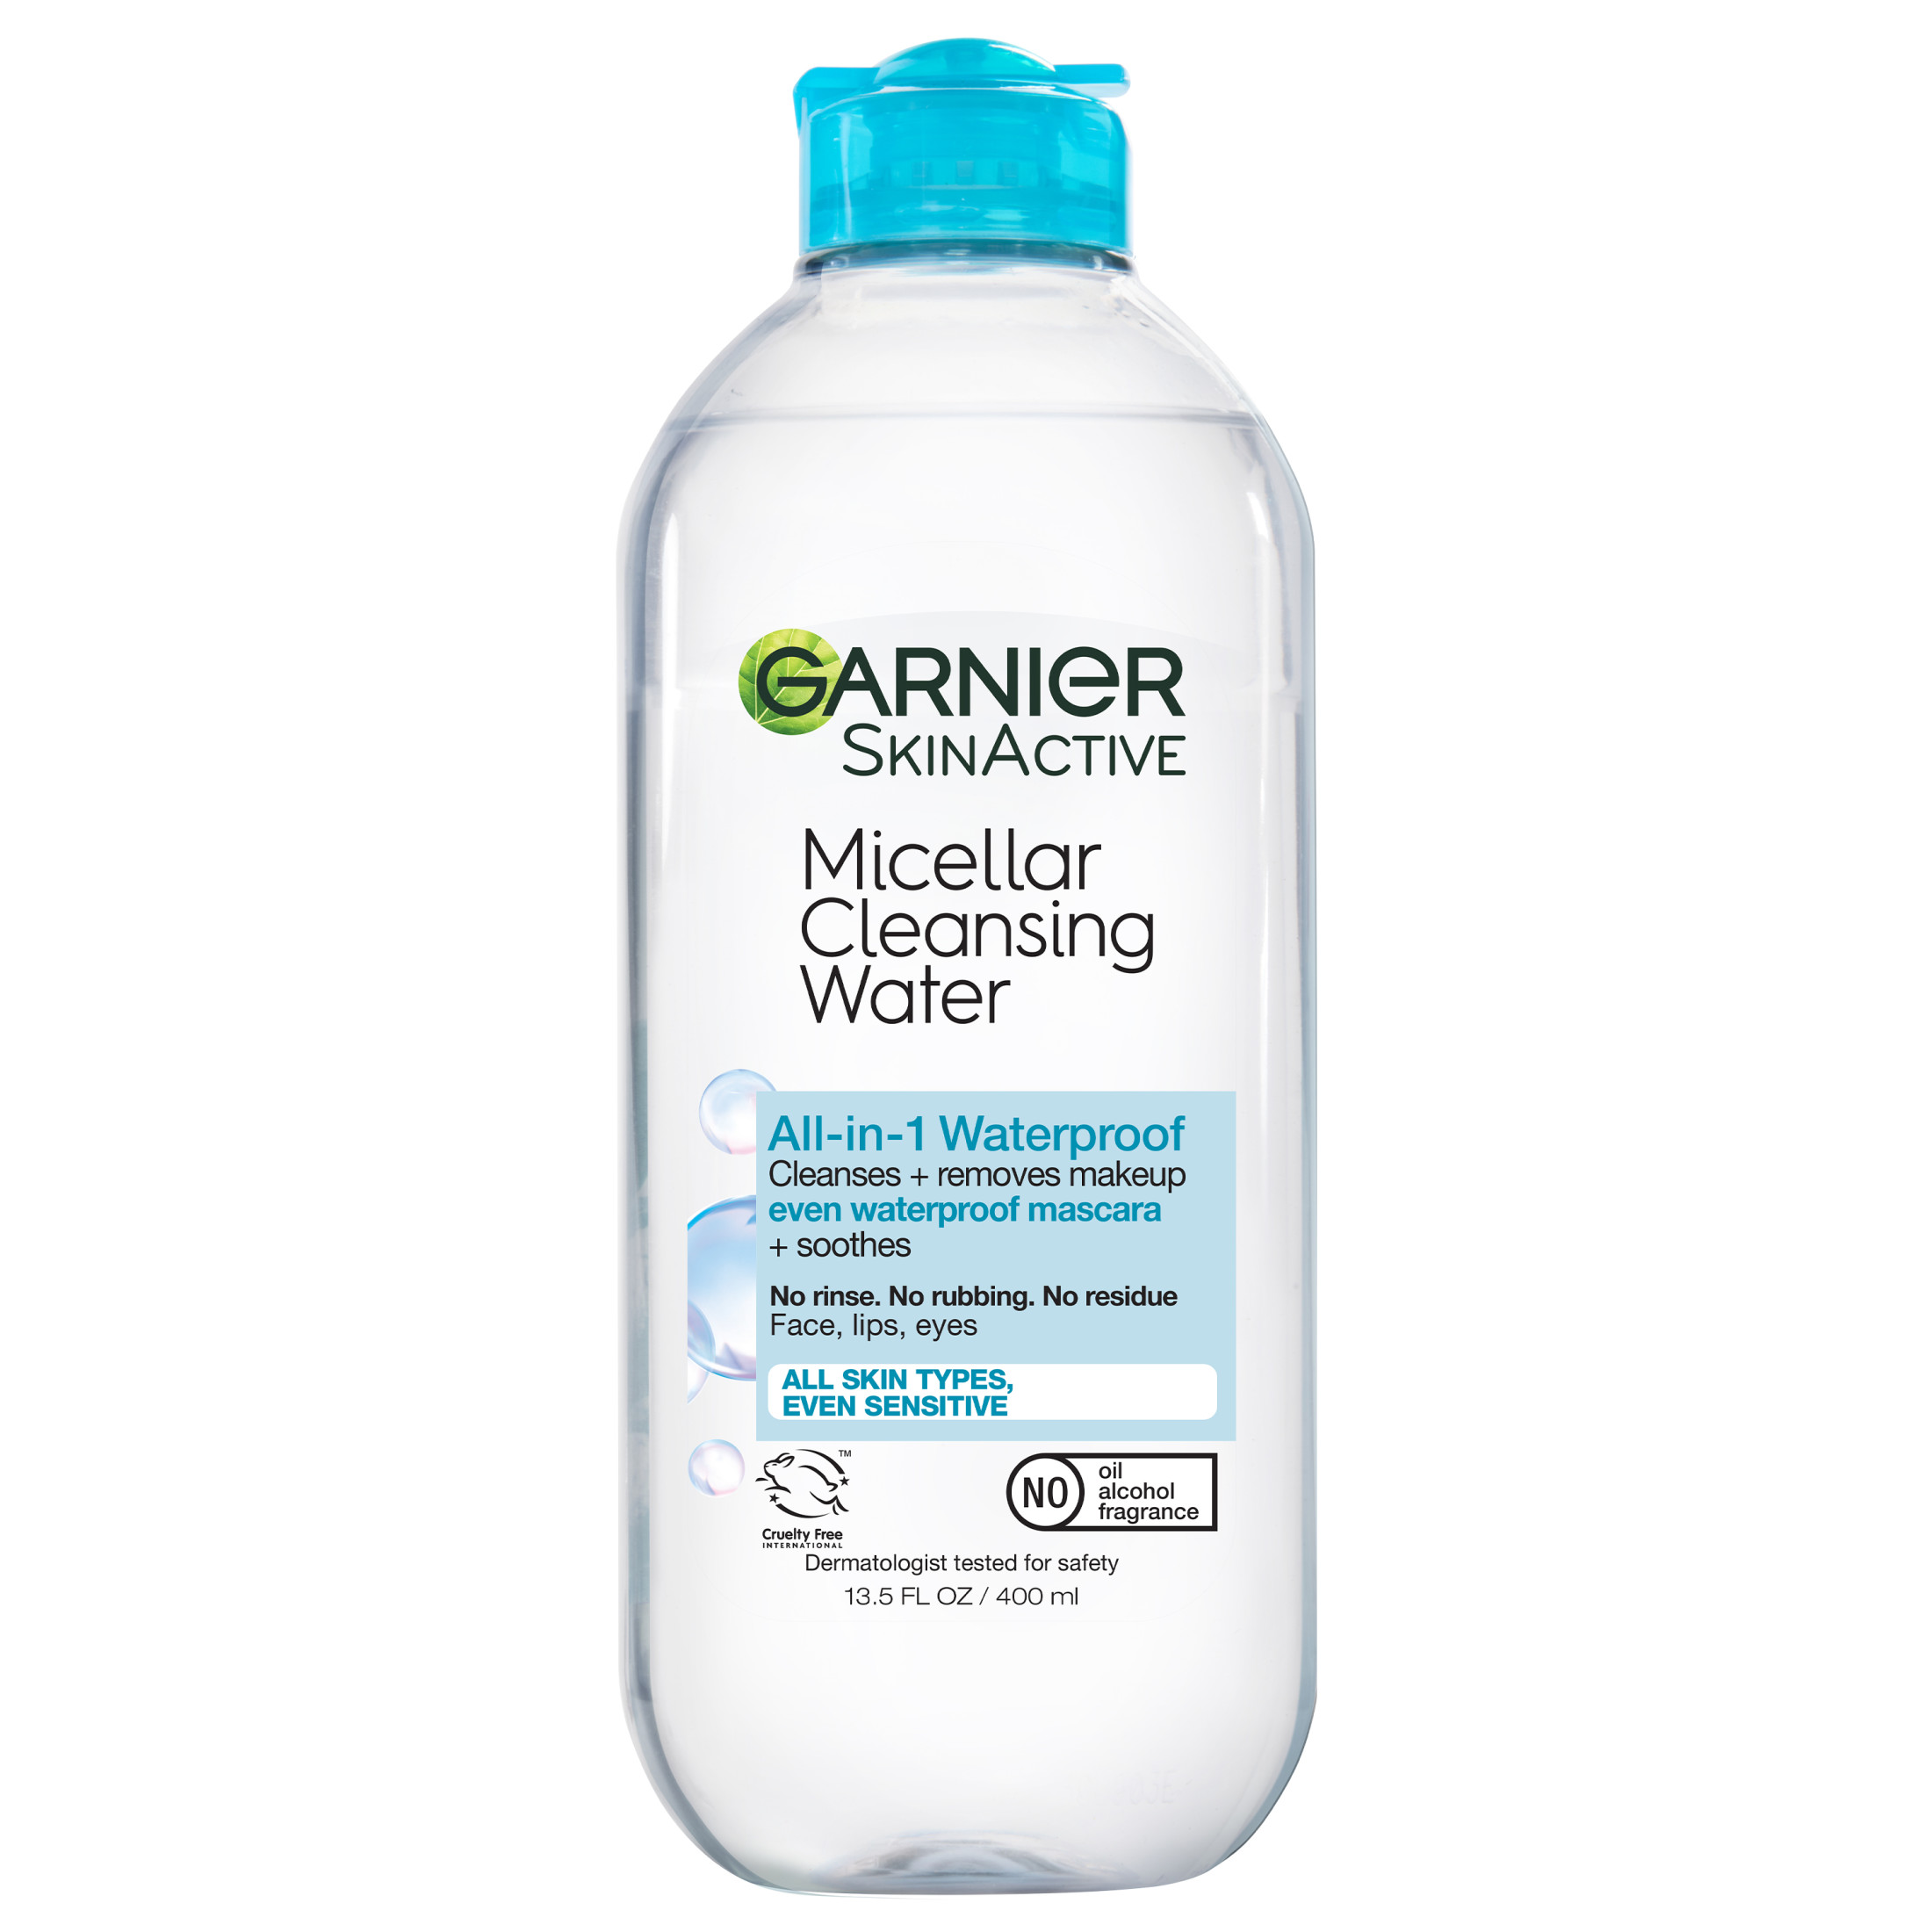 Garnier SkinActive Micellar Cleansing Water All in 1 Removes Waterproof Makeup, 13.5 fl oz - image 3 of 11